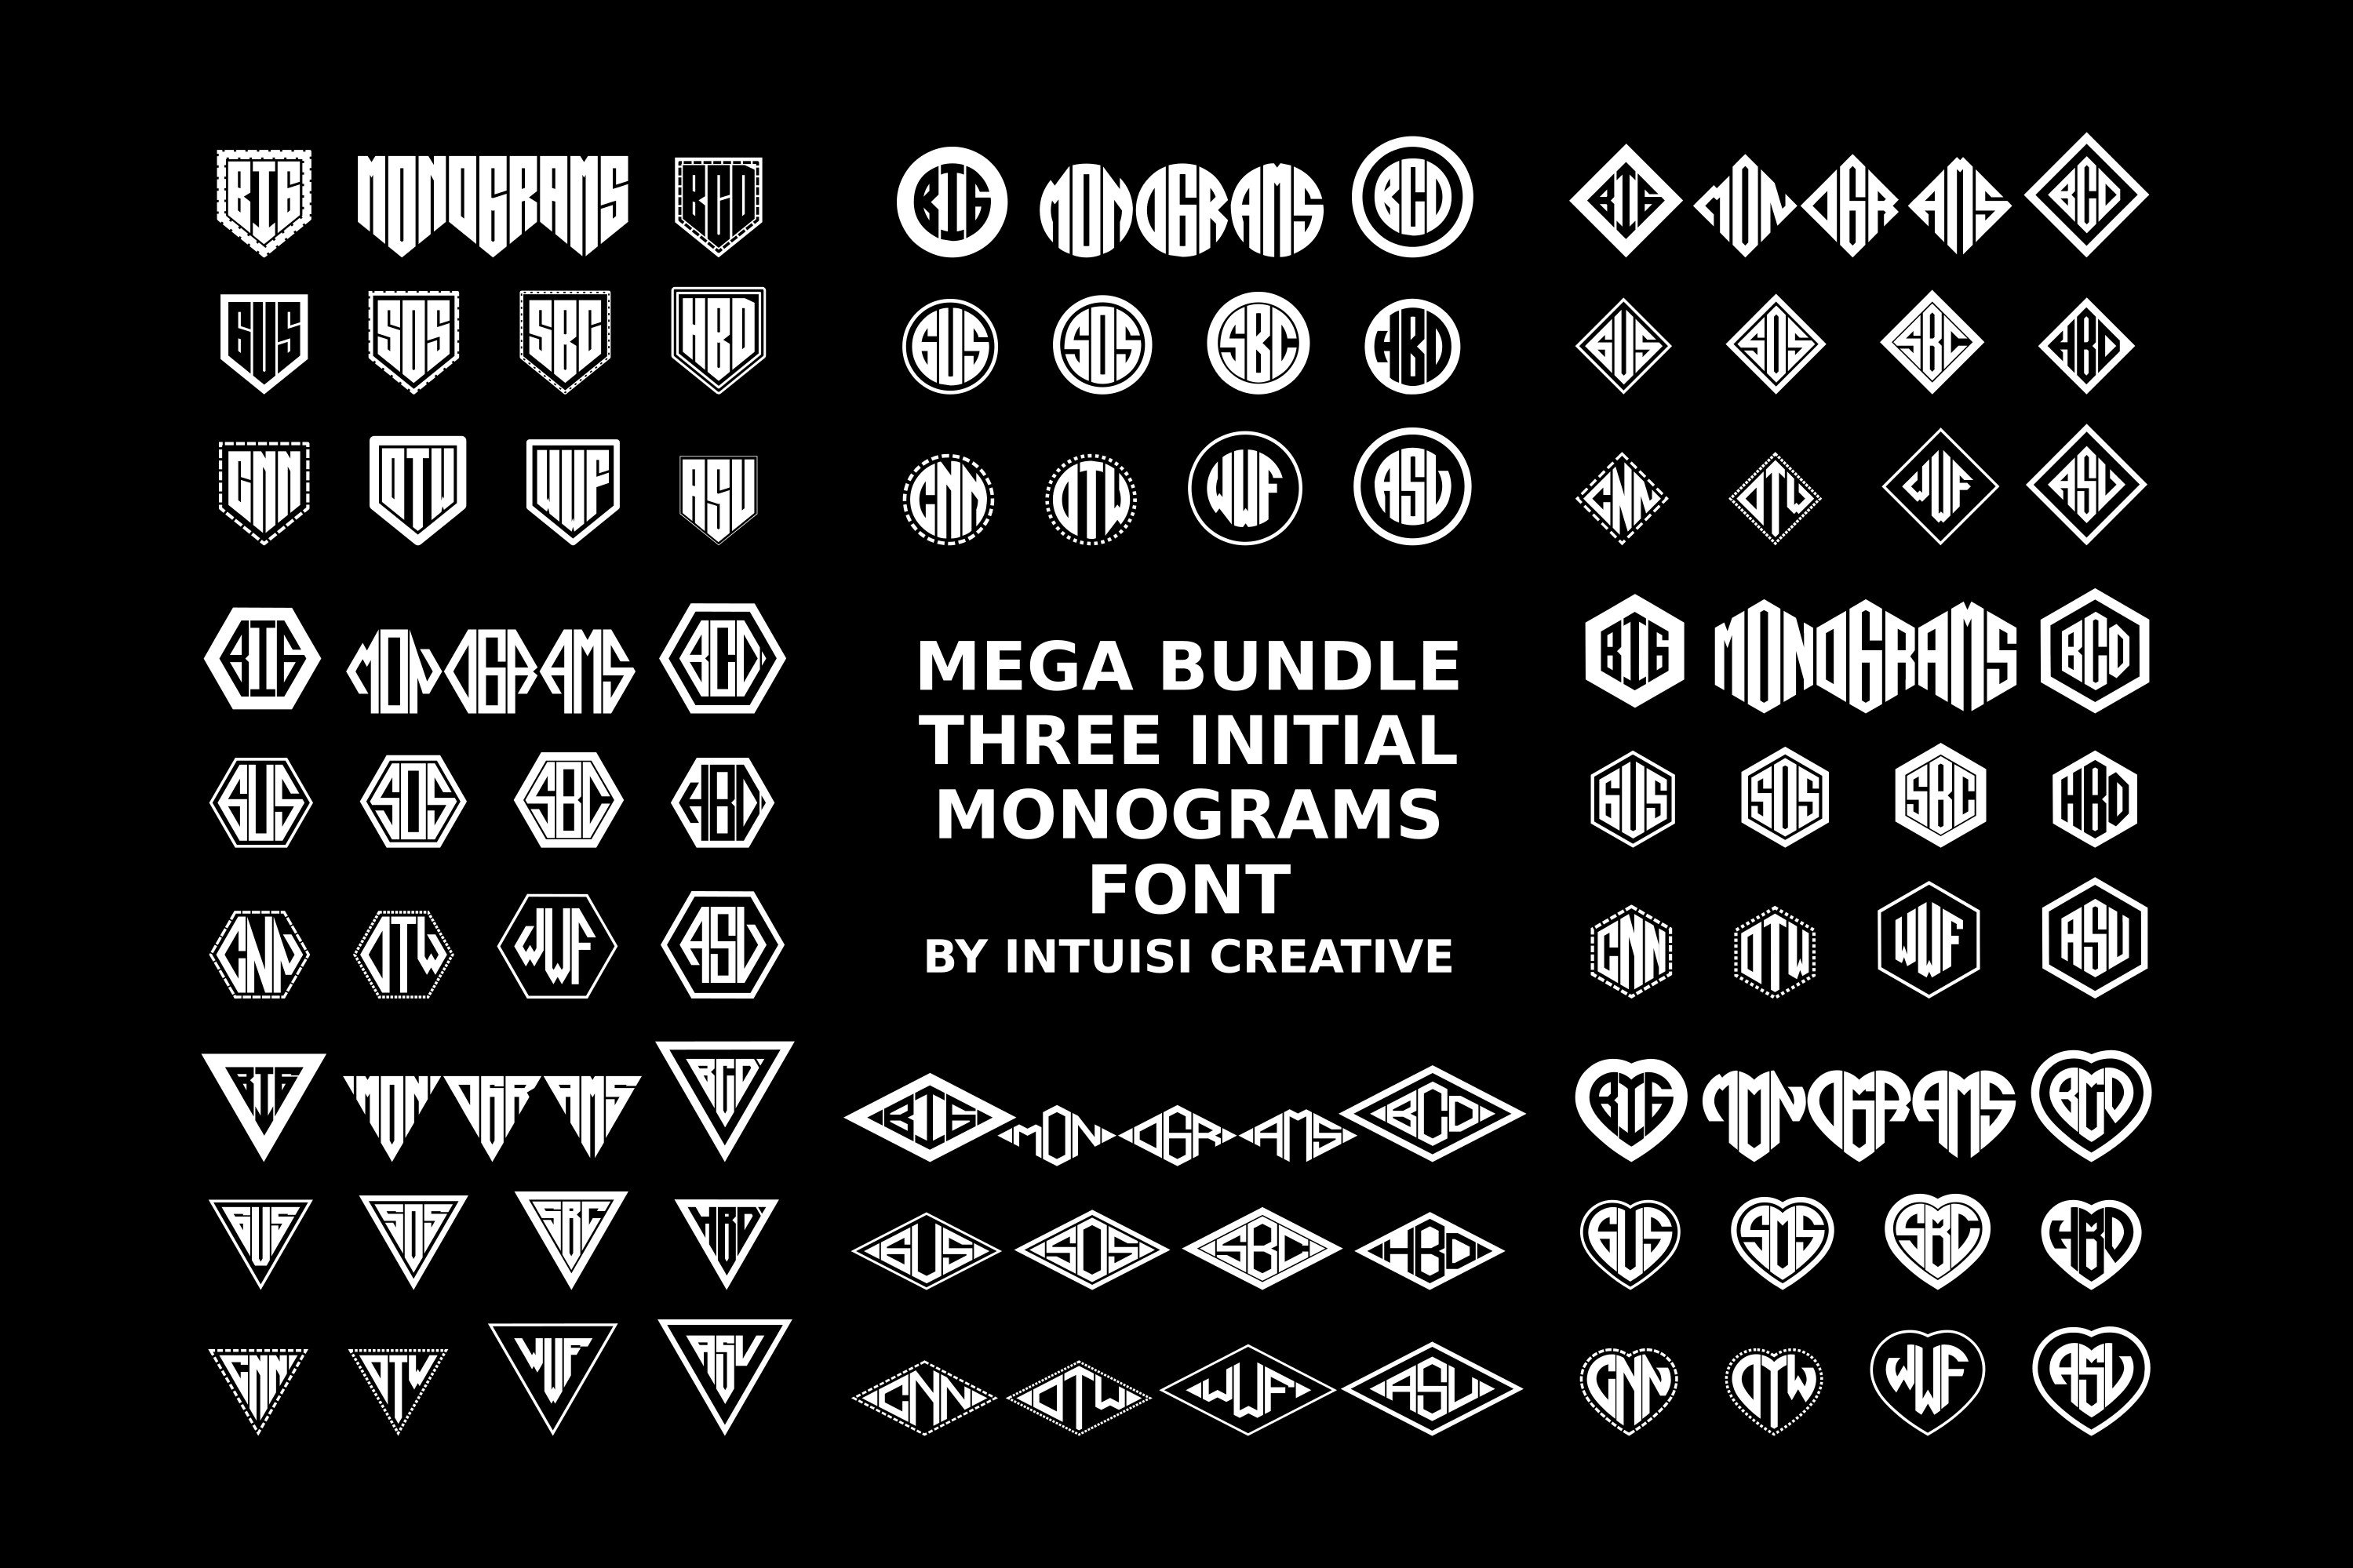 Mega Bundle Three-letter Monogram cover image.